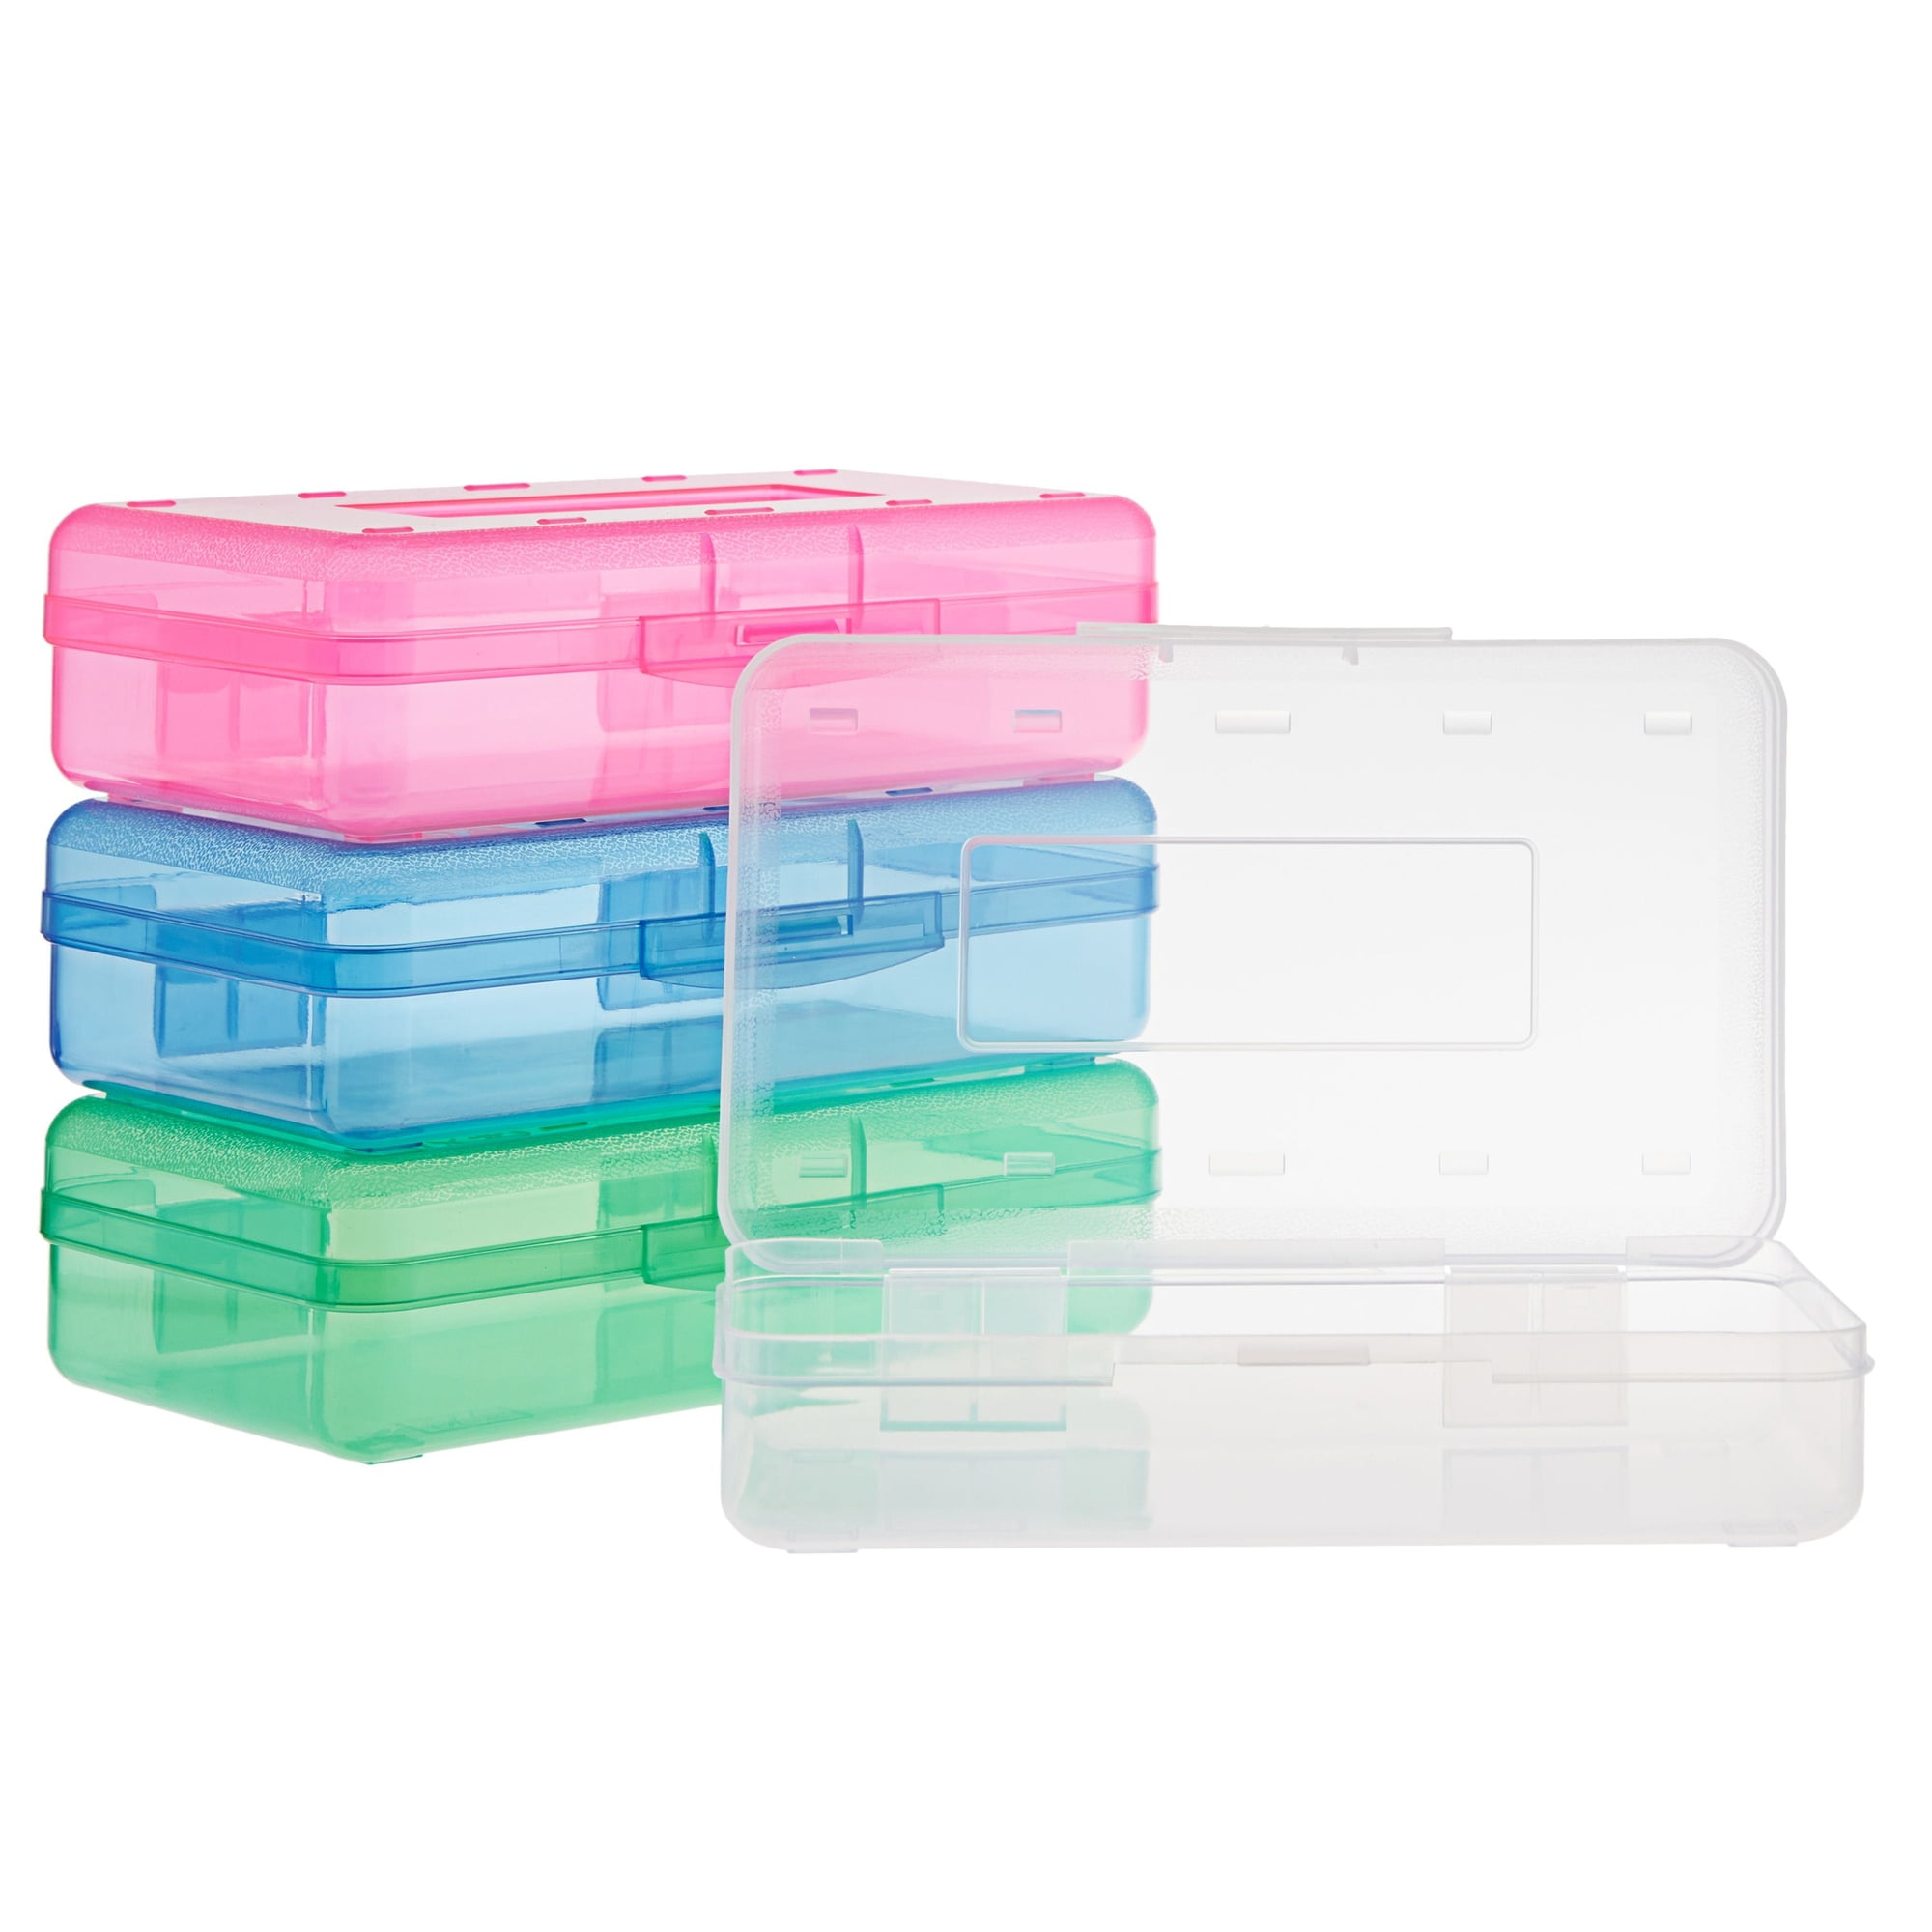 Aerofara Plastic Pencil Case Box with Lid Snap Closure, Large Capacity School Supplies Storage Organizer Box for Kids (1)